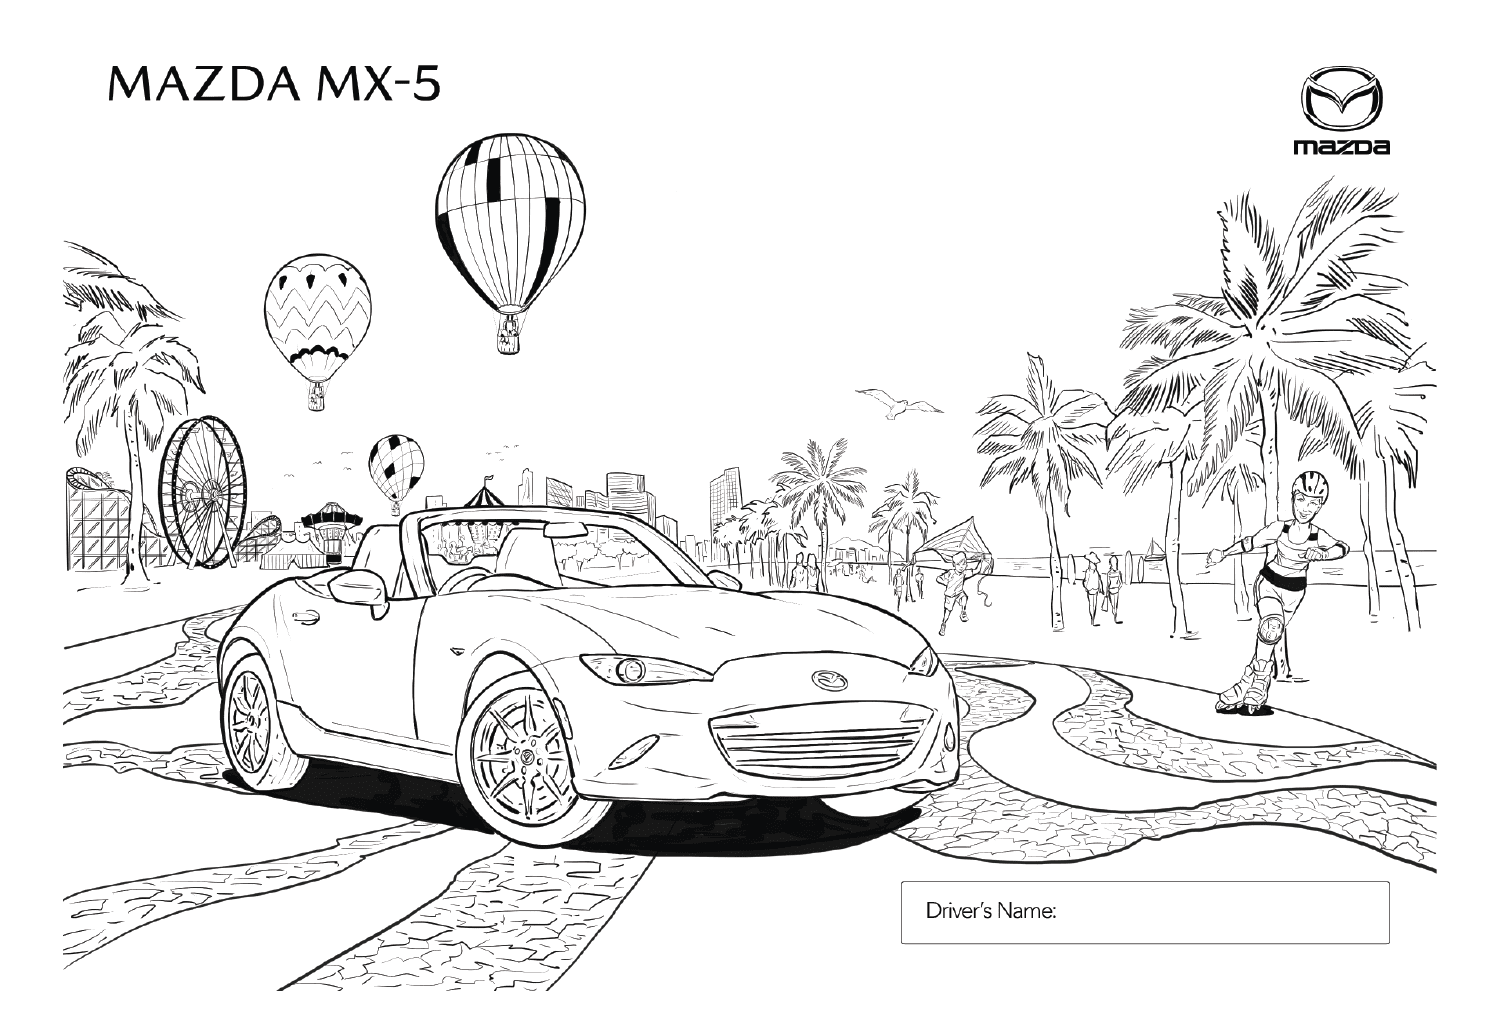 Mazda MX-5 Coloring Page from Mazda